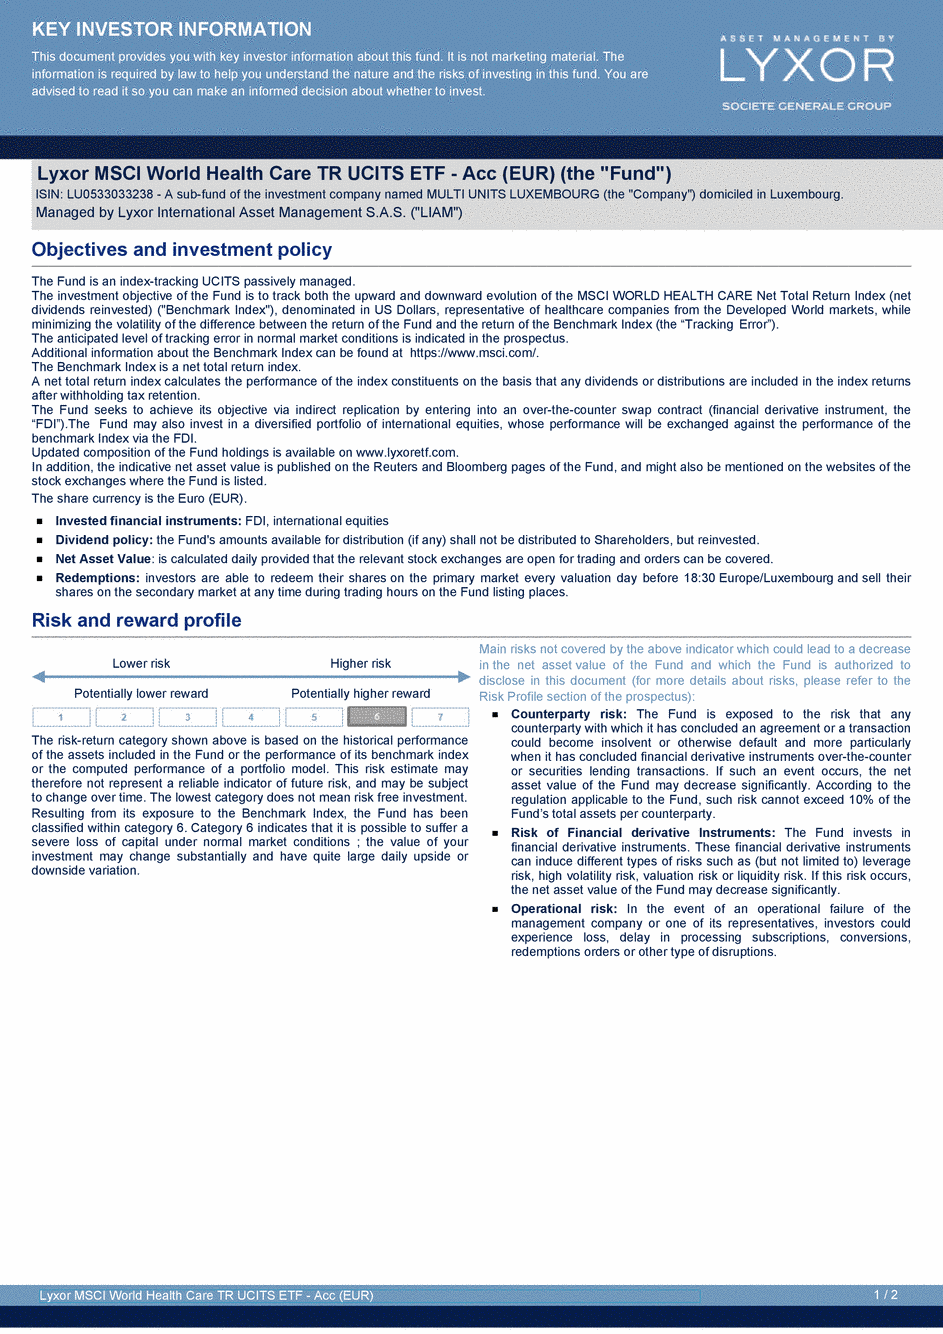 DICI Lyxor MSCI World Health Care TR UCITS ETF - Acc (EUR) - 19/02/2021 - Anglais